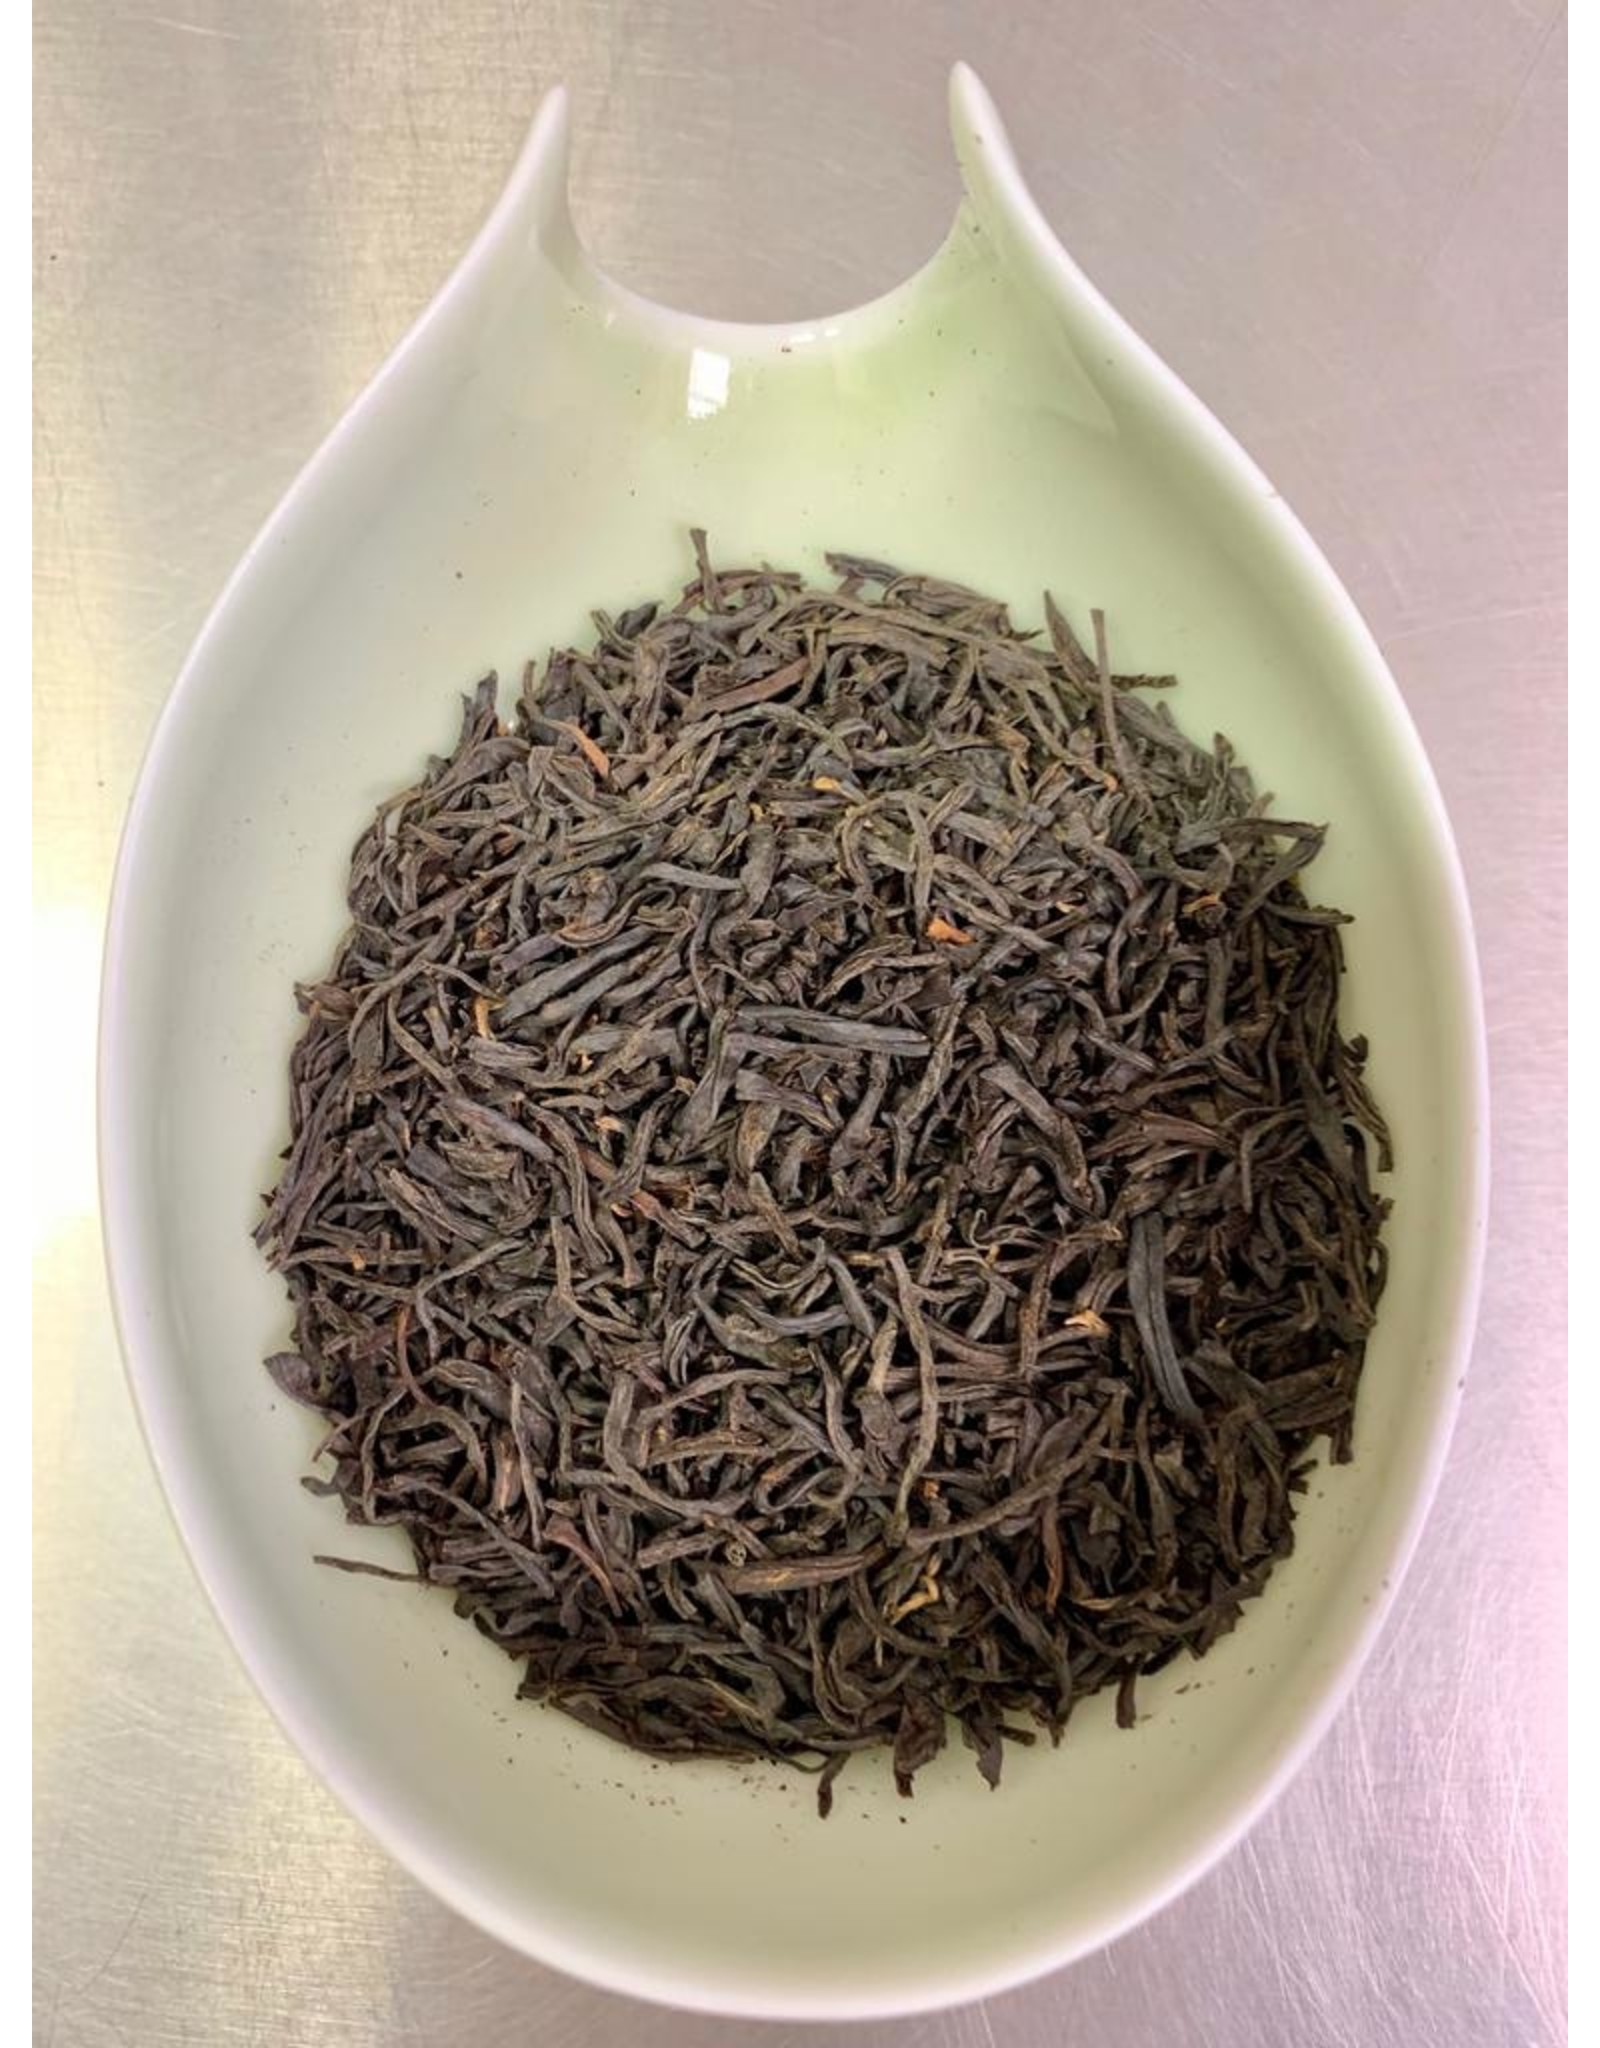 Tea from China GABA Organic Supreme Grade Black